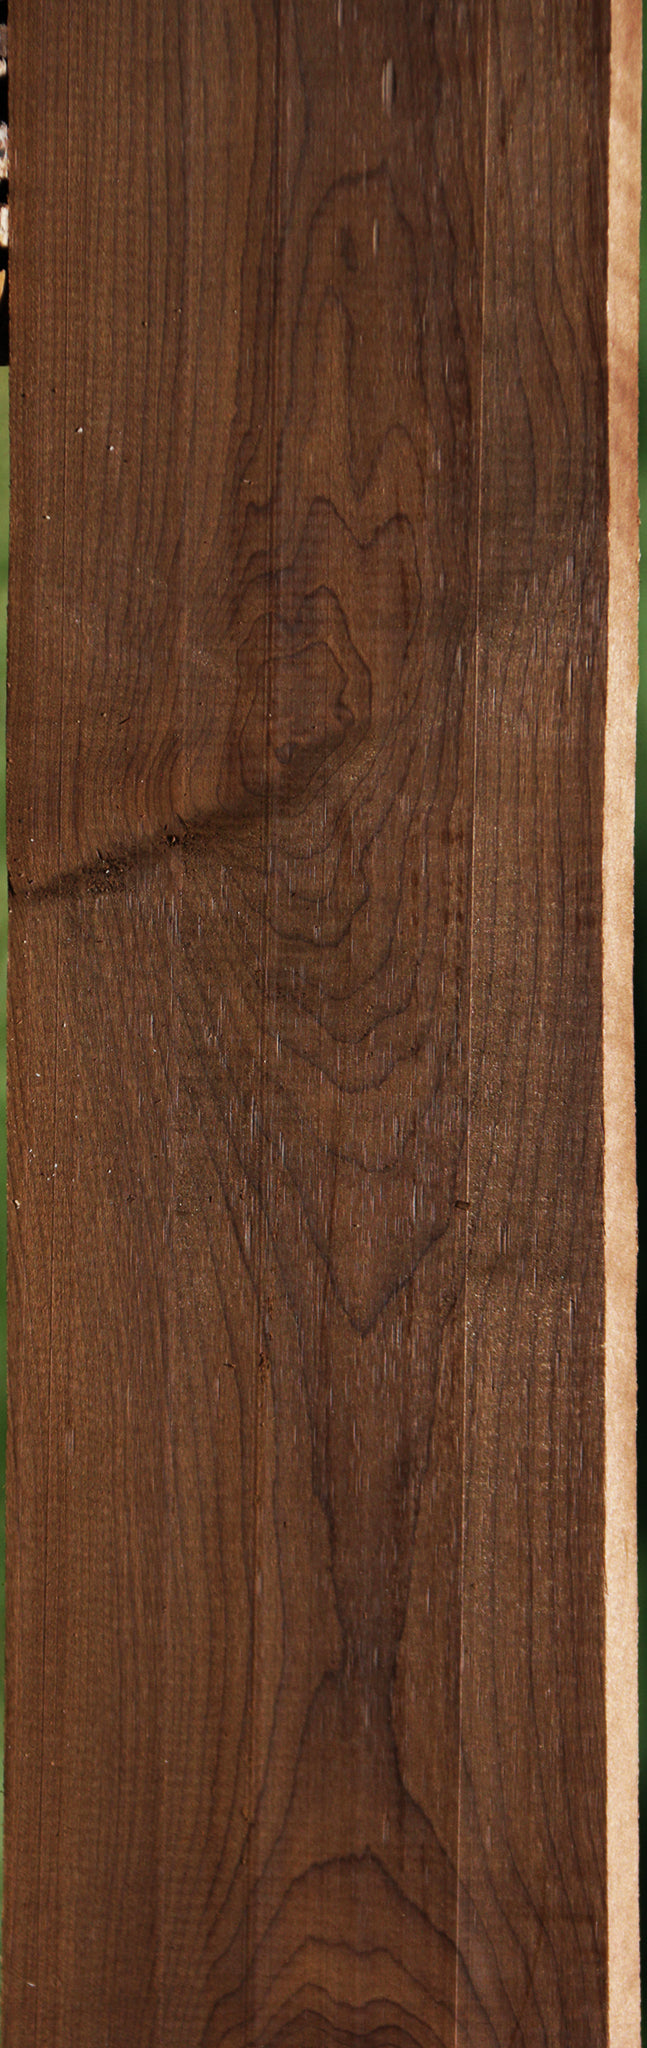 Curly Caramelized Maple Lumber